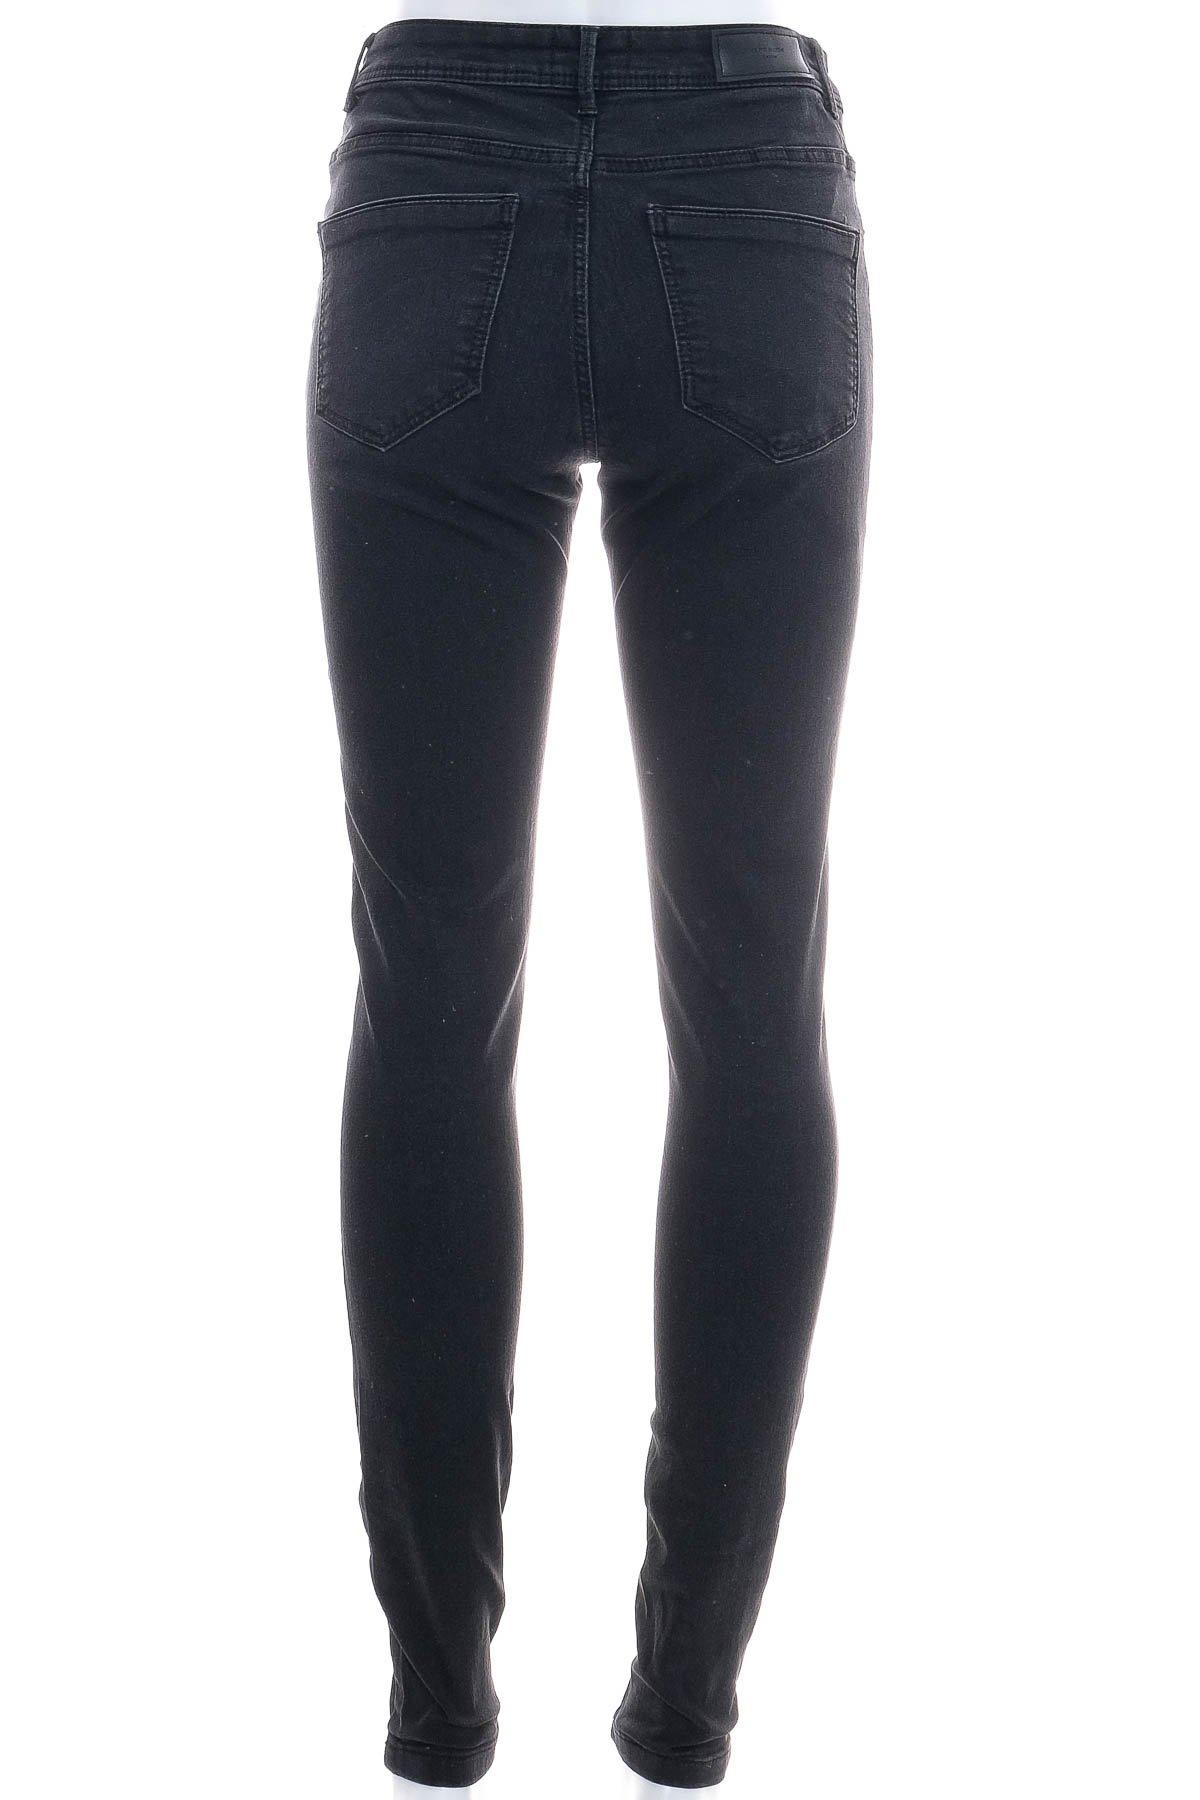 Women's jeans - VERO MODA - 1